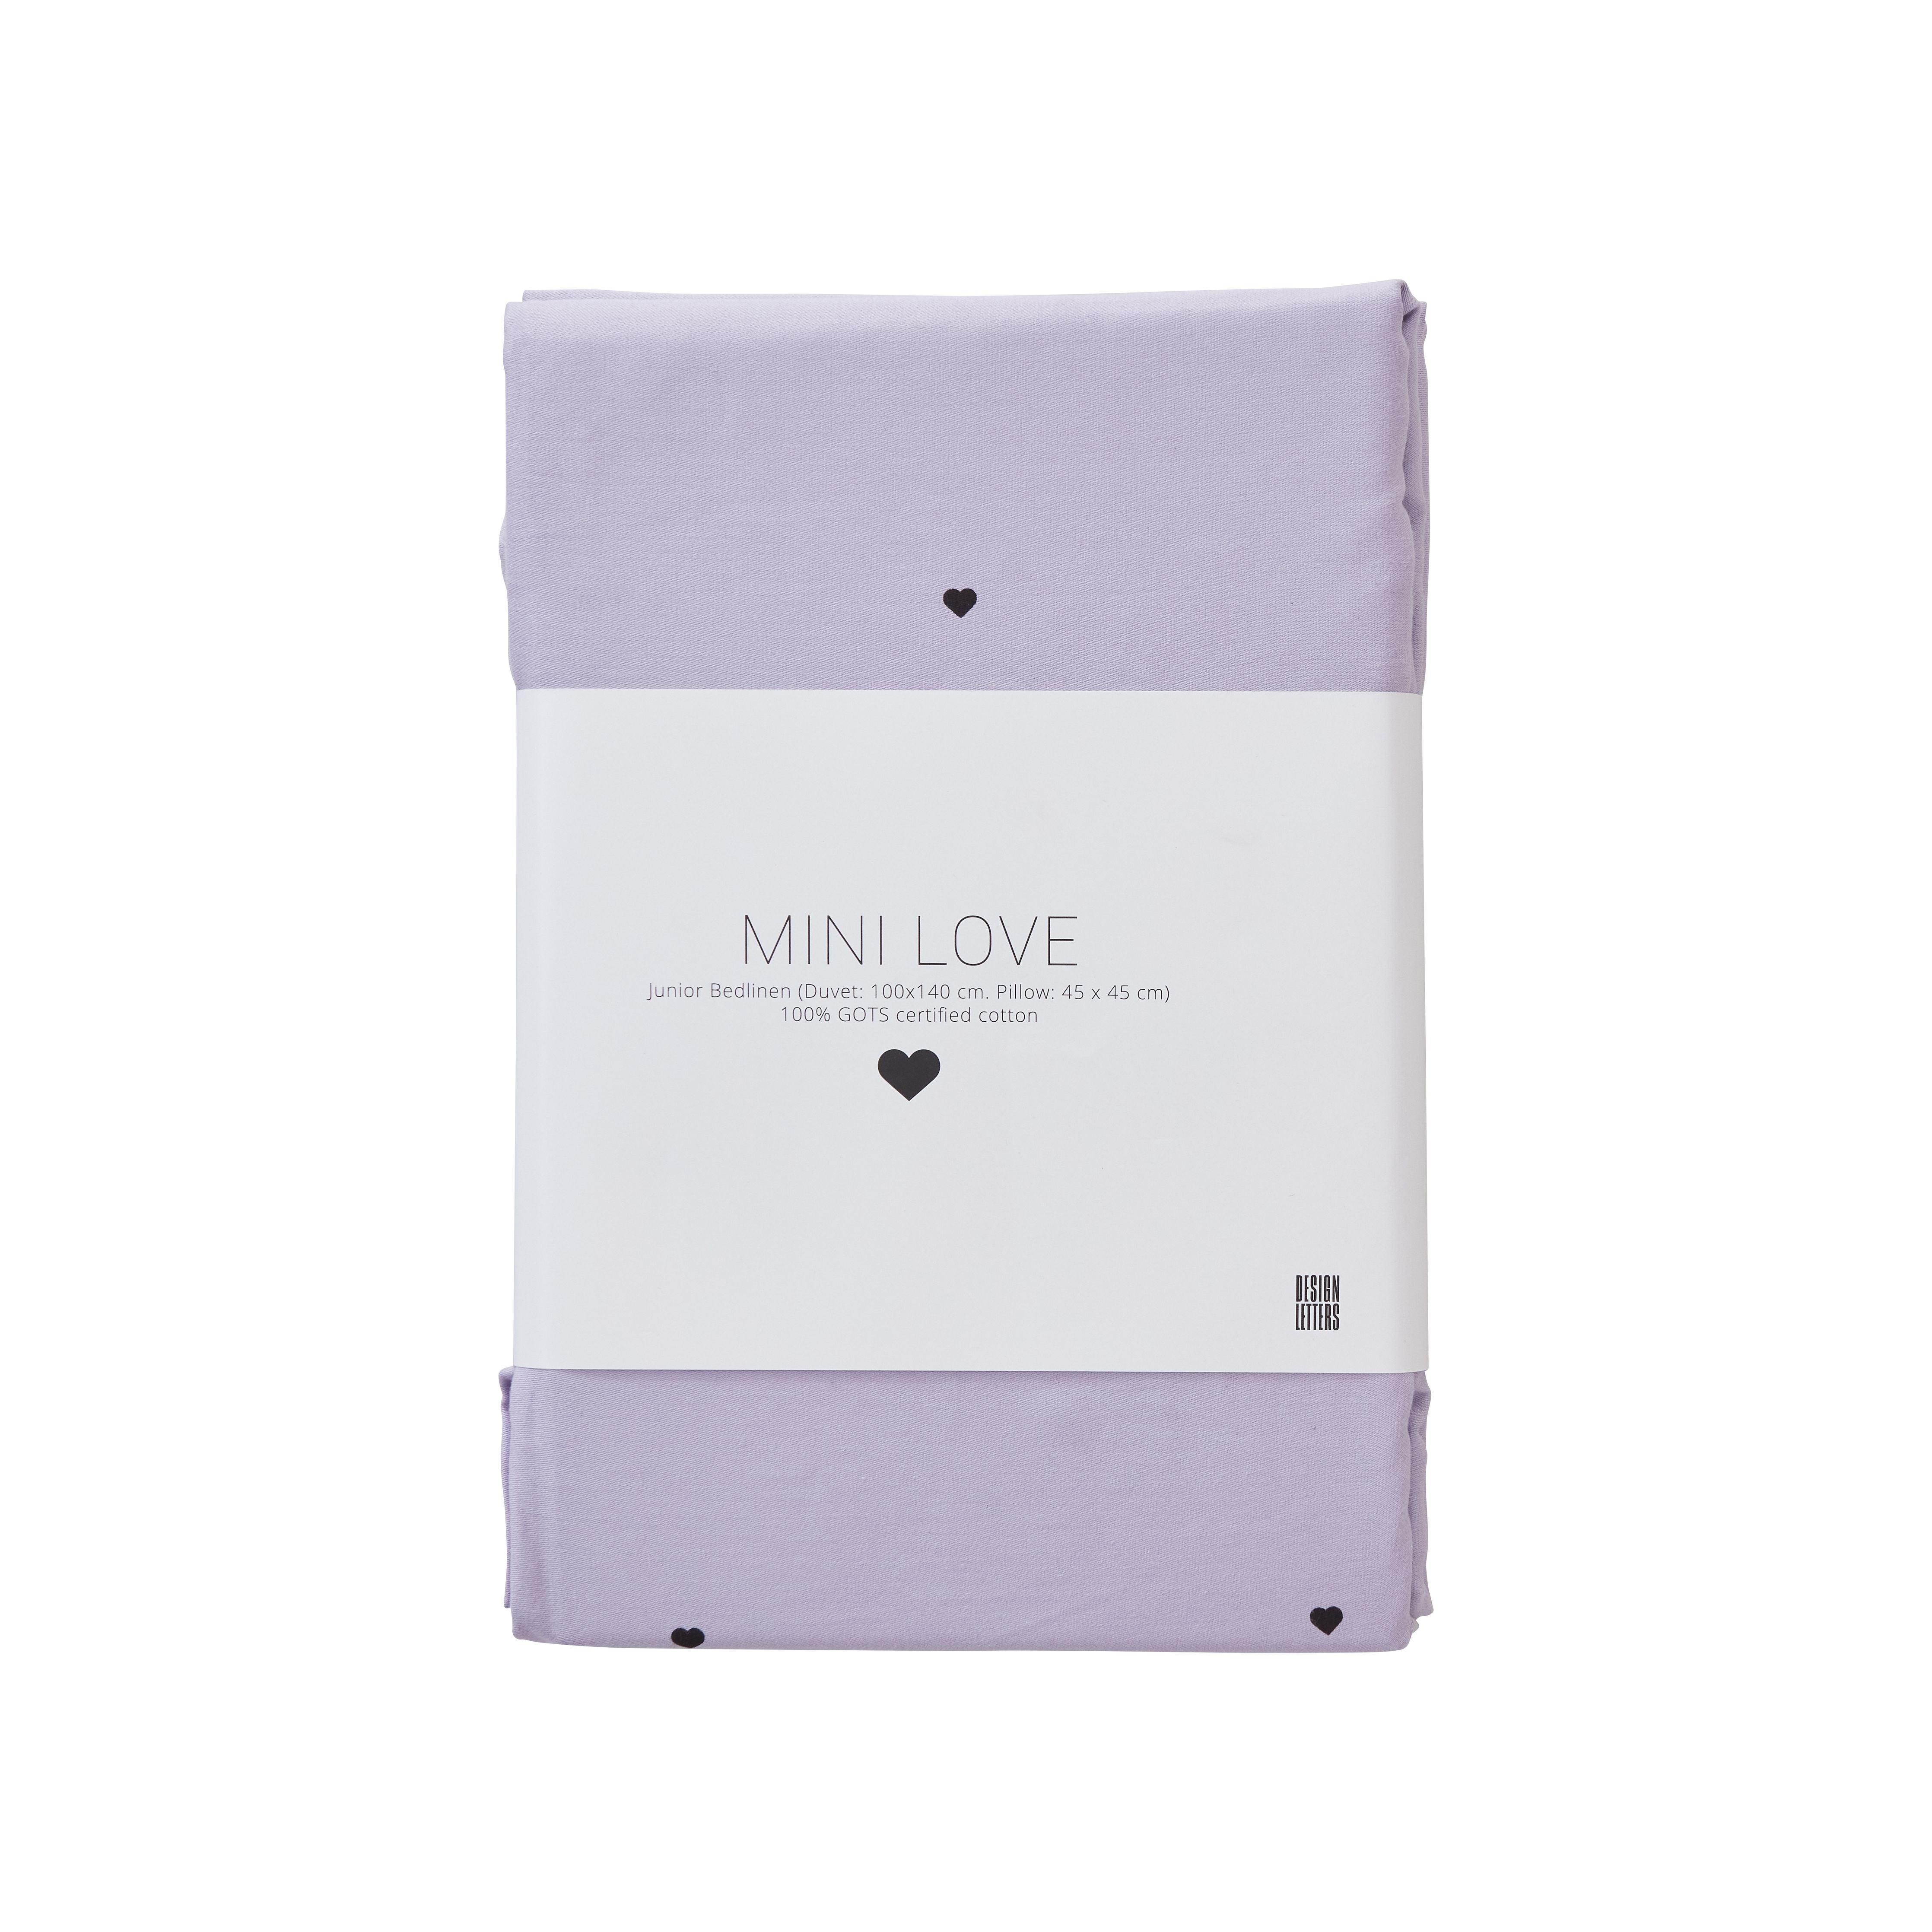 Letras de diseño Mini Love Junior Pillow -Cases y Drumbe Covers 100x140 cm, lavanda